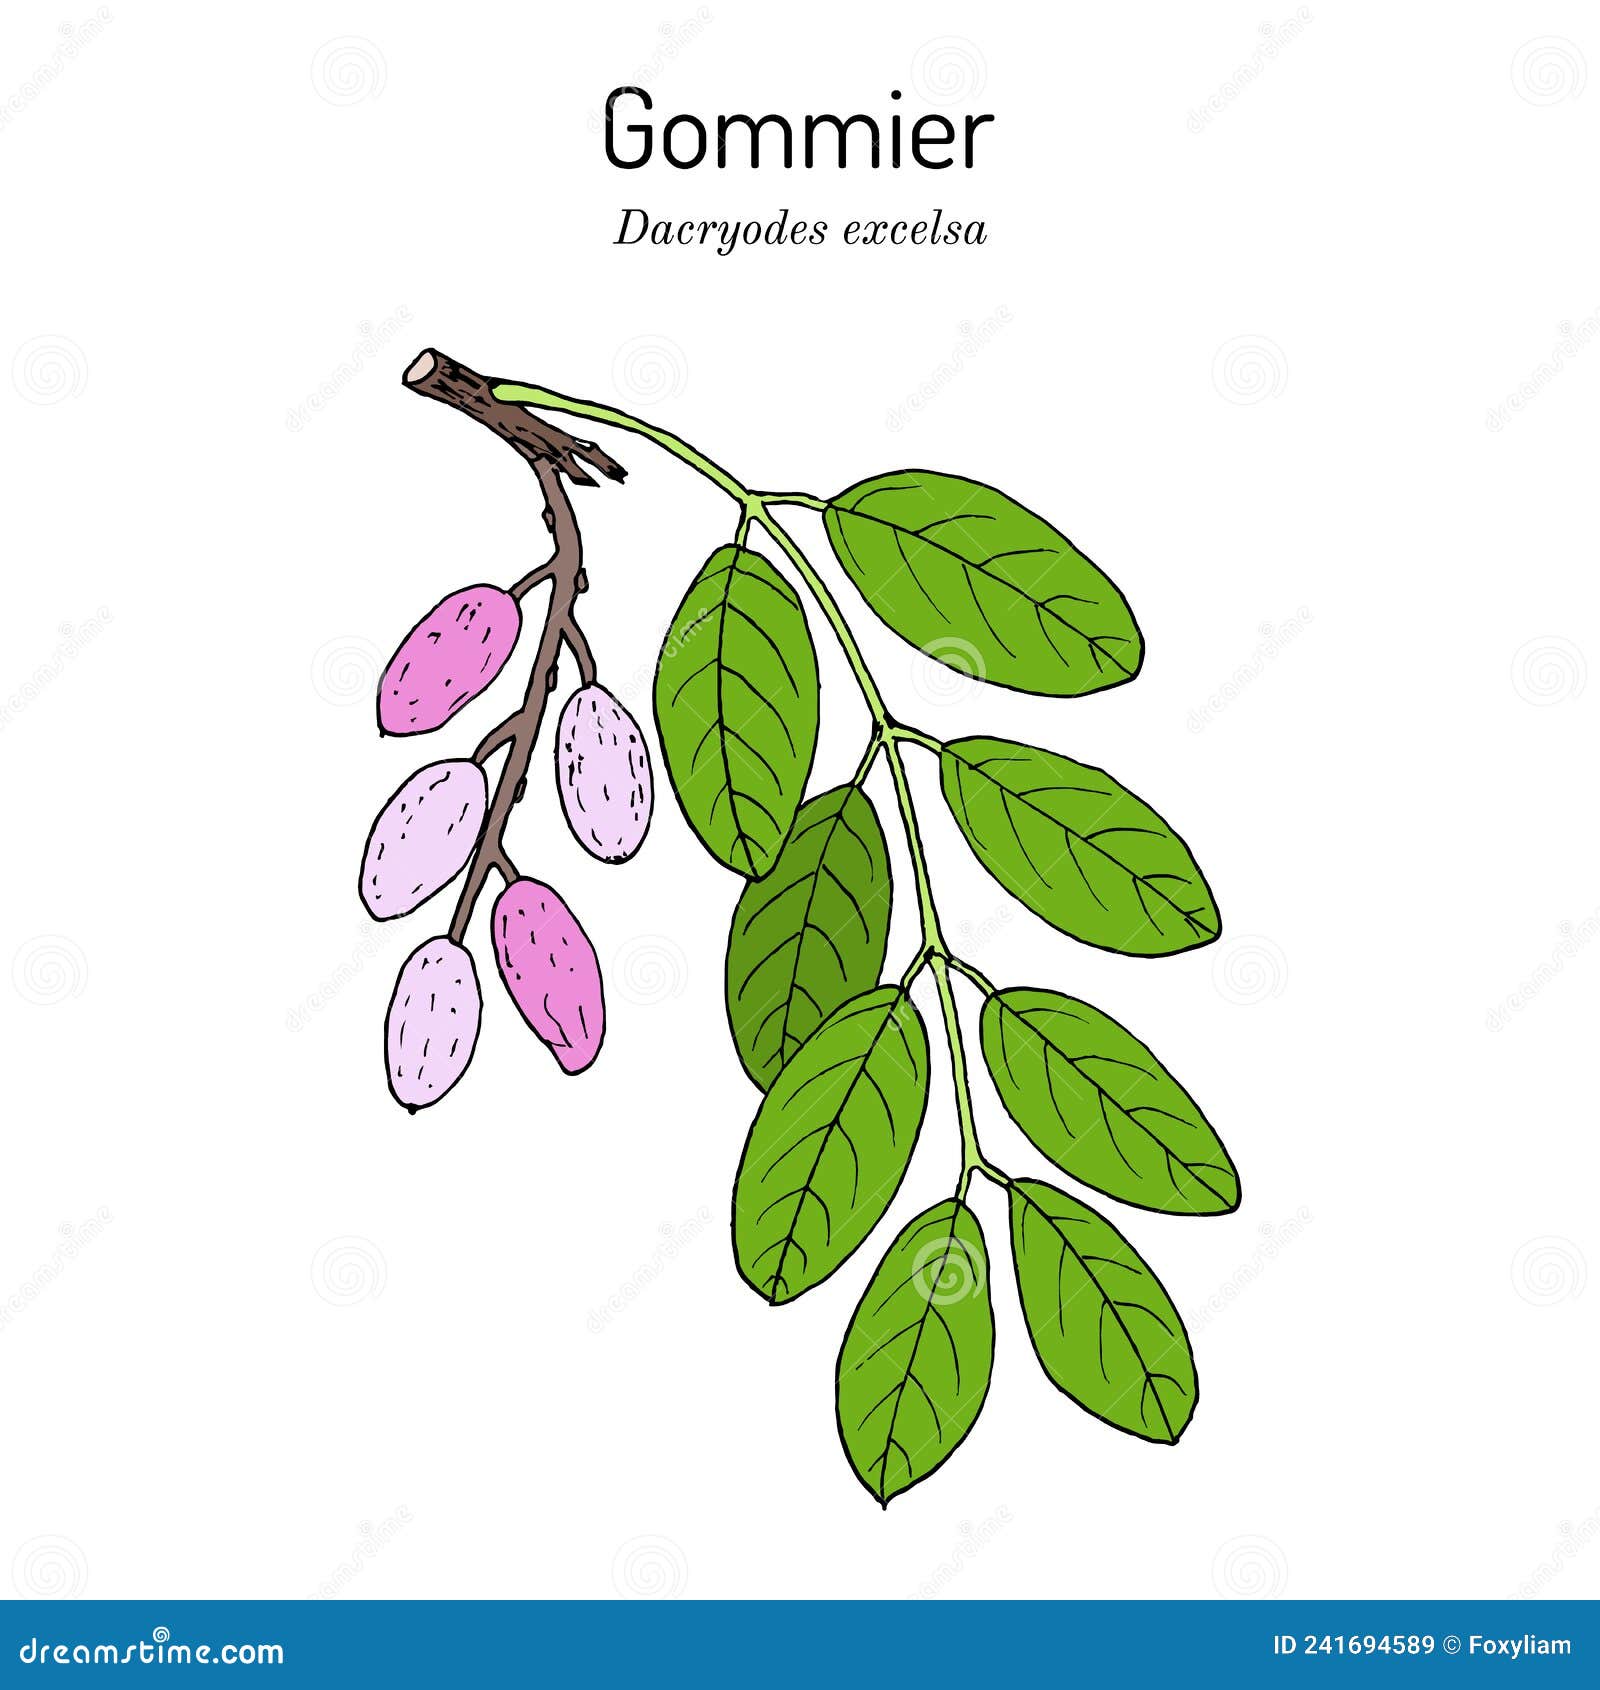 gommier, or candlewood, or tabonuco dacryodes excelsa , medicinal plant